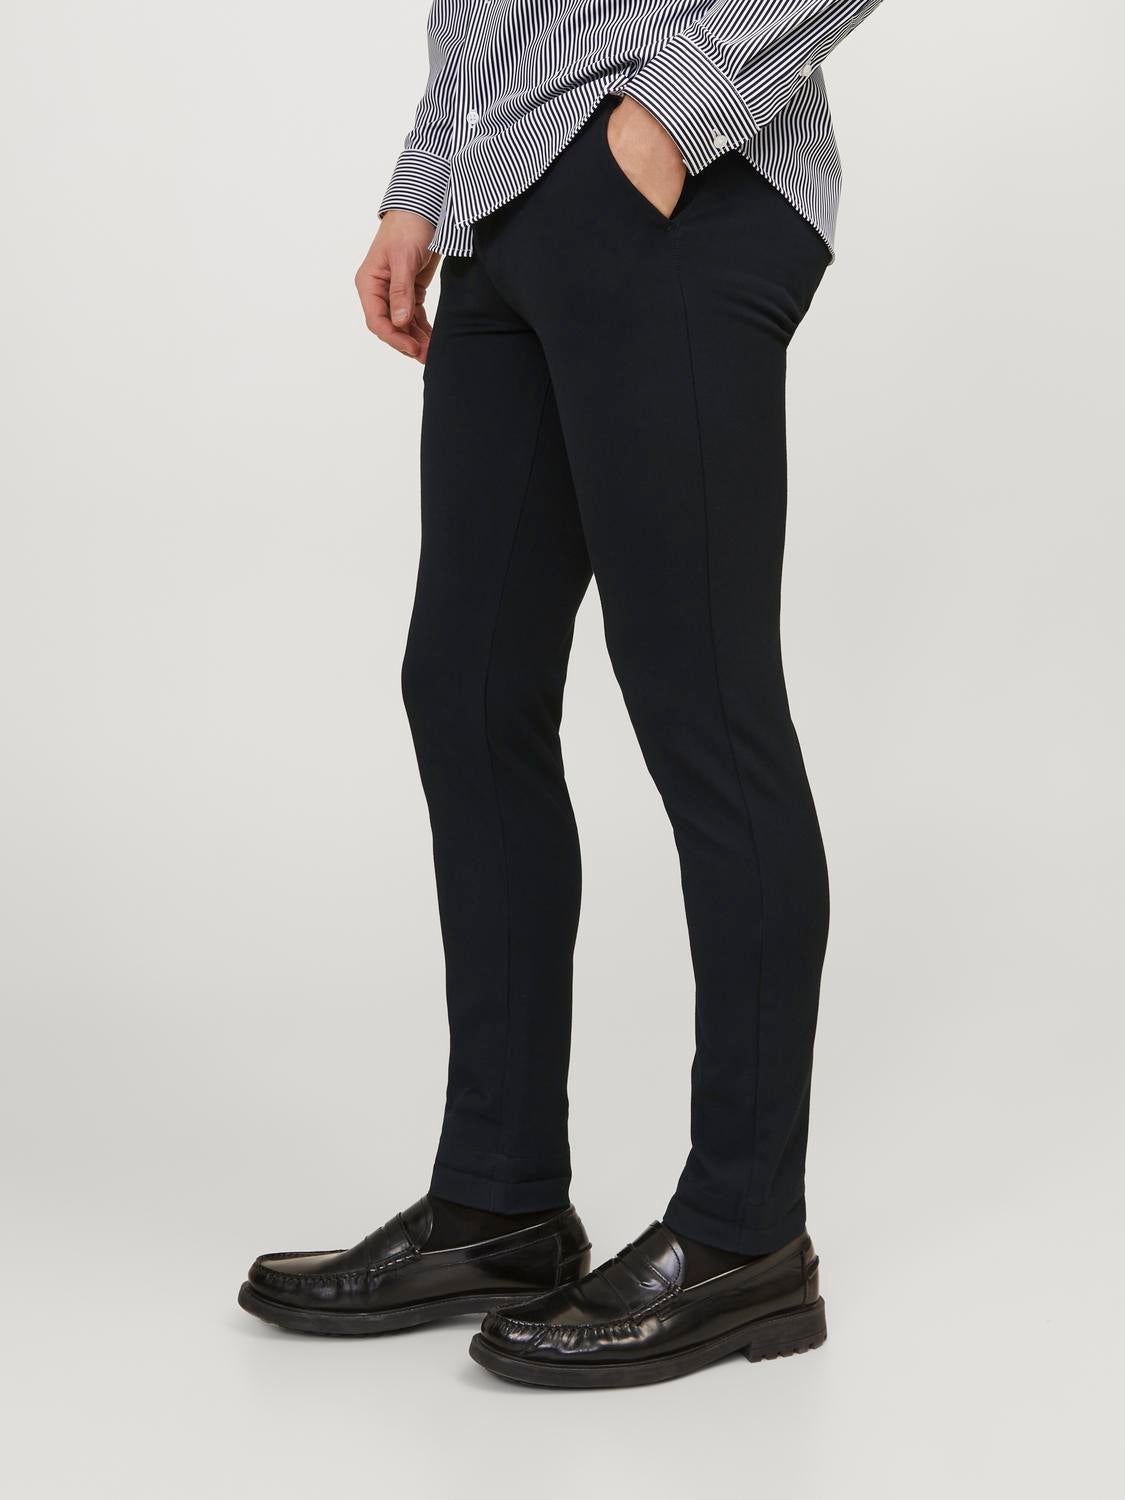 ASOS DESIGN 2 pack skinny smart pants in black and navy | ASOS